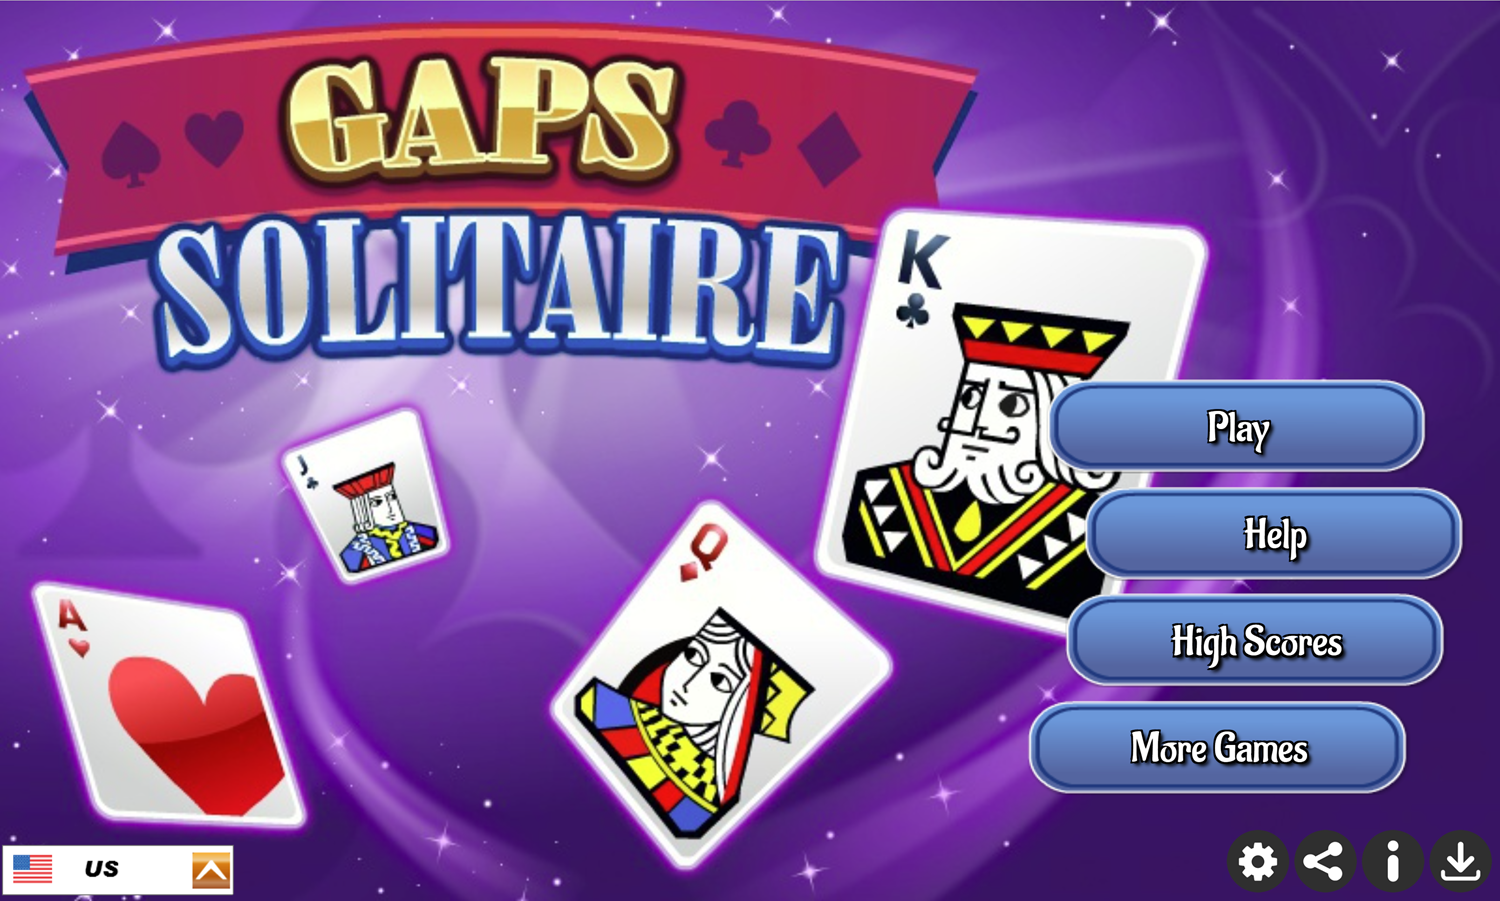 Gaps Solitaire Game Welcome Screen Screenshot.